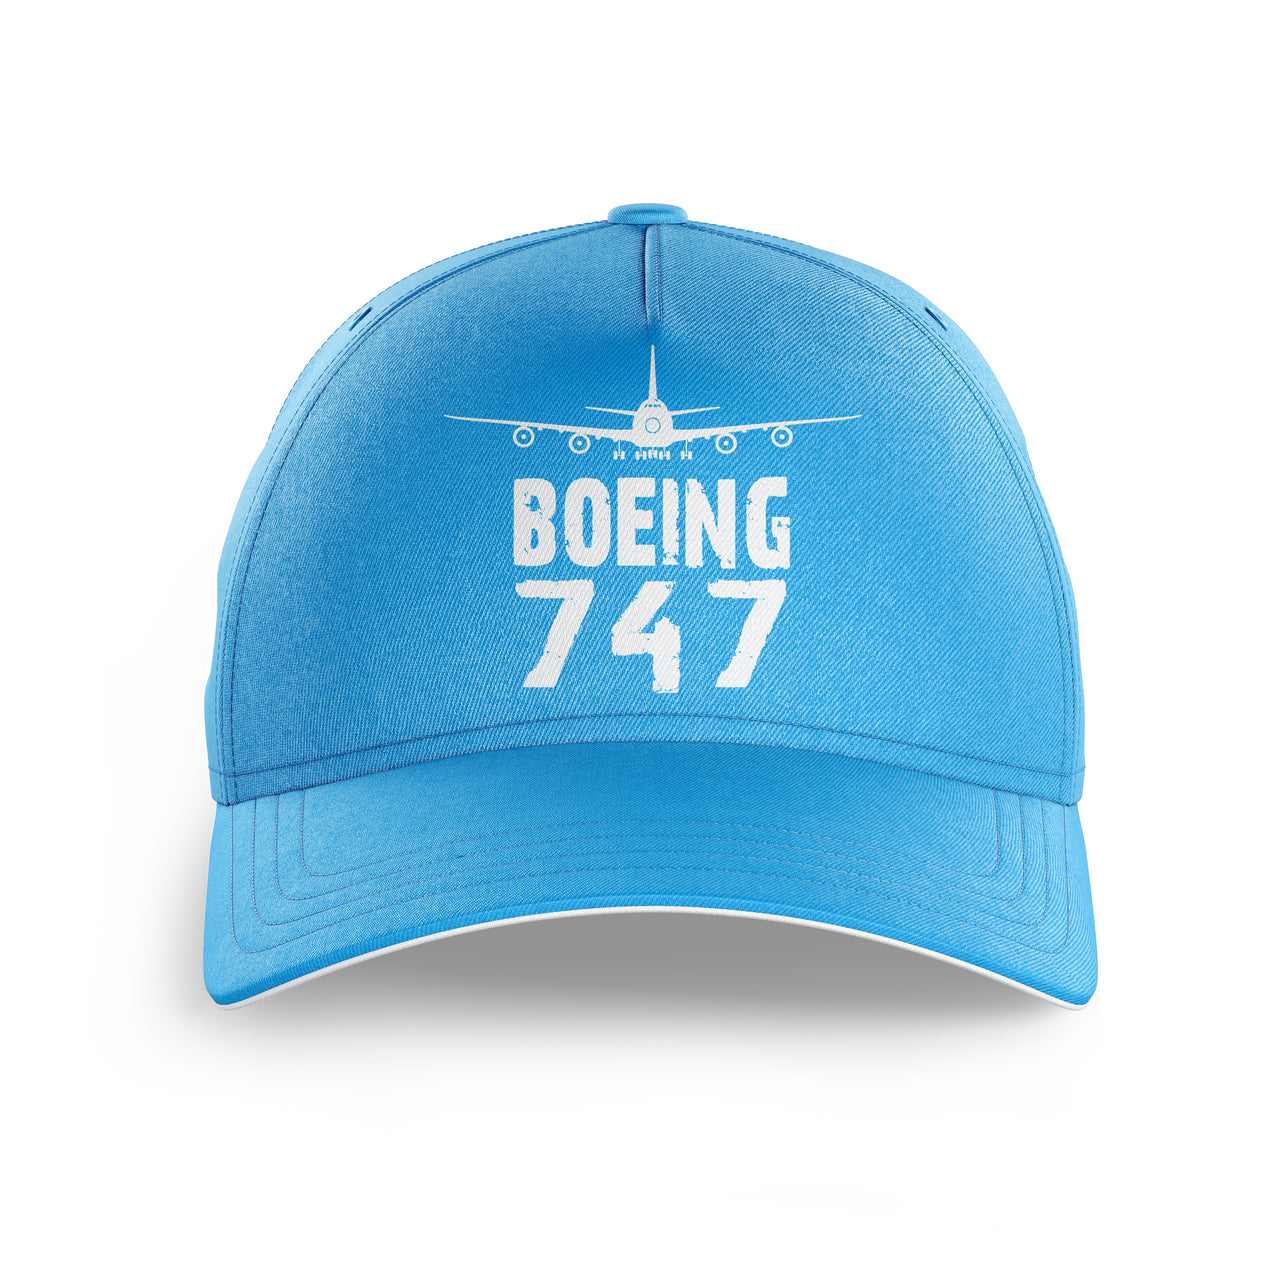 Boeing 747 & Plane Printed Hats